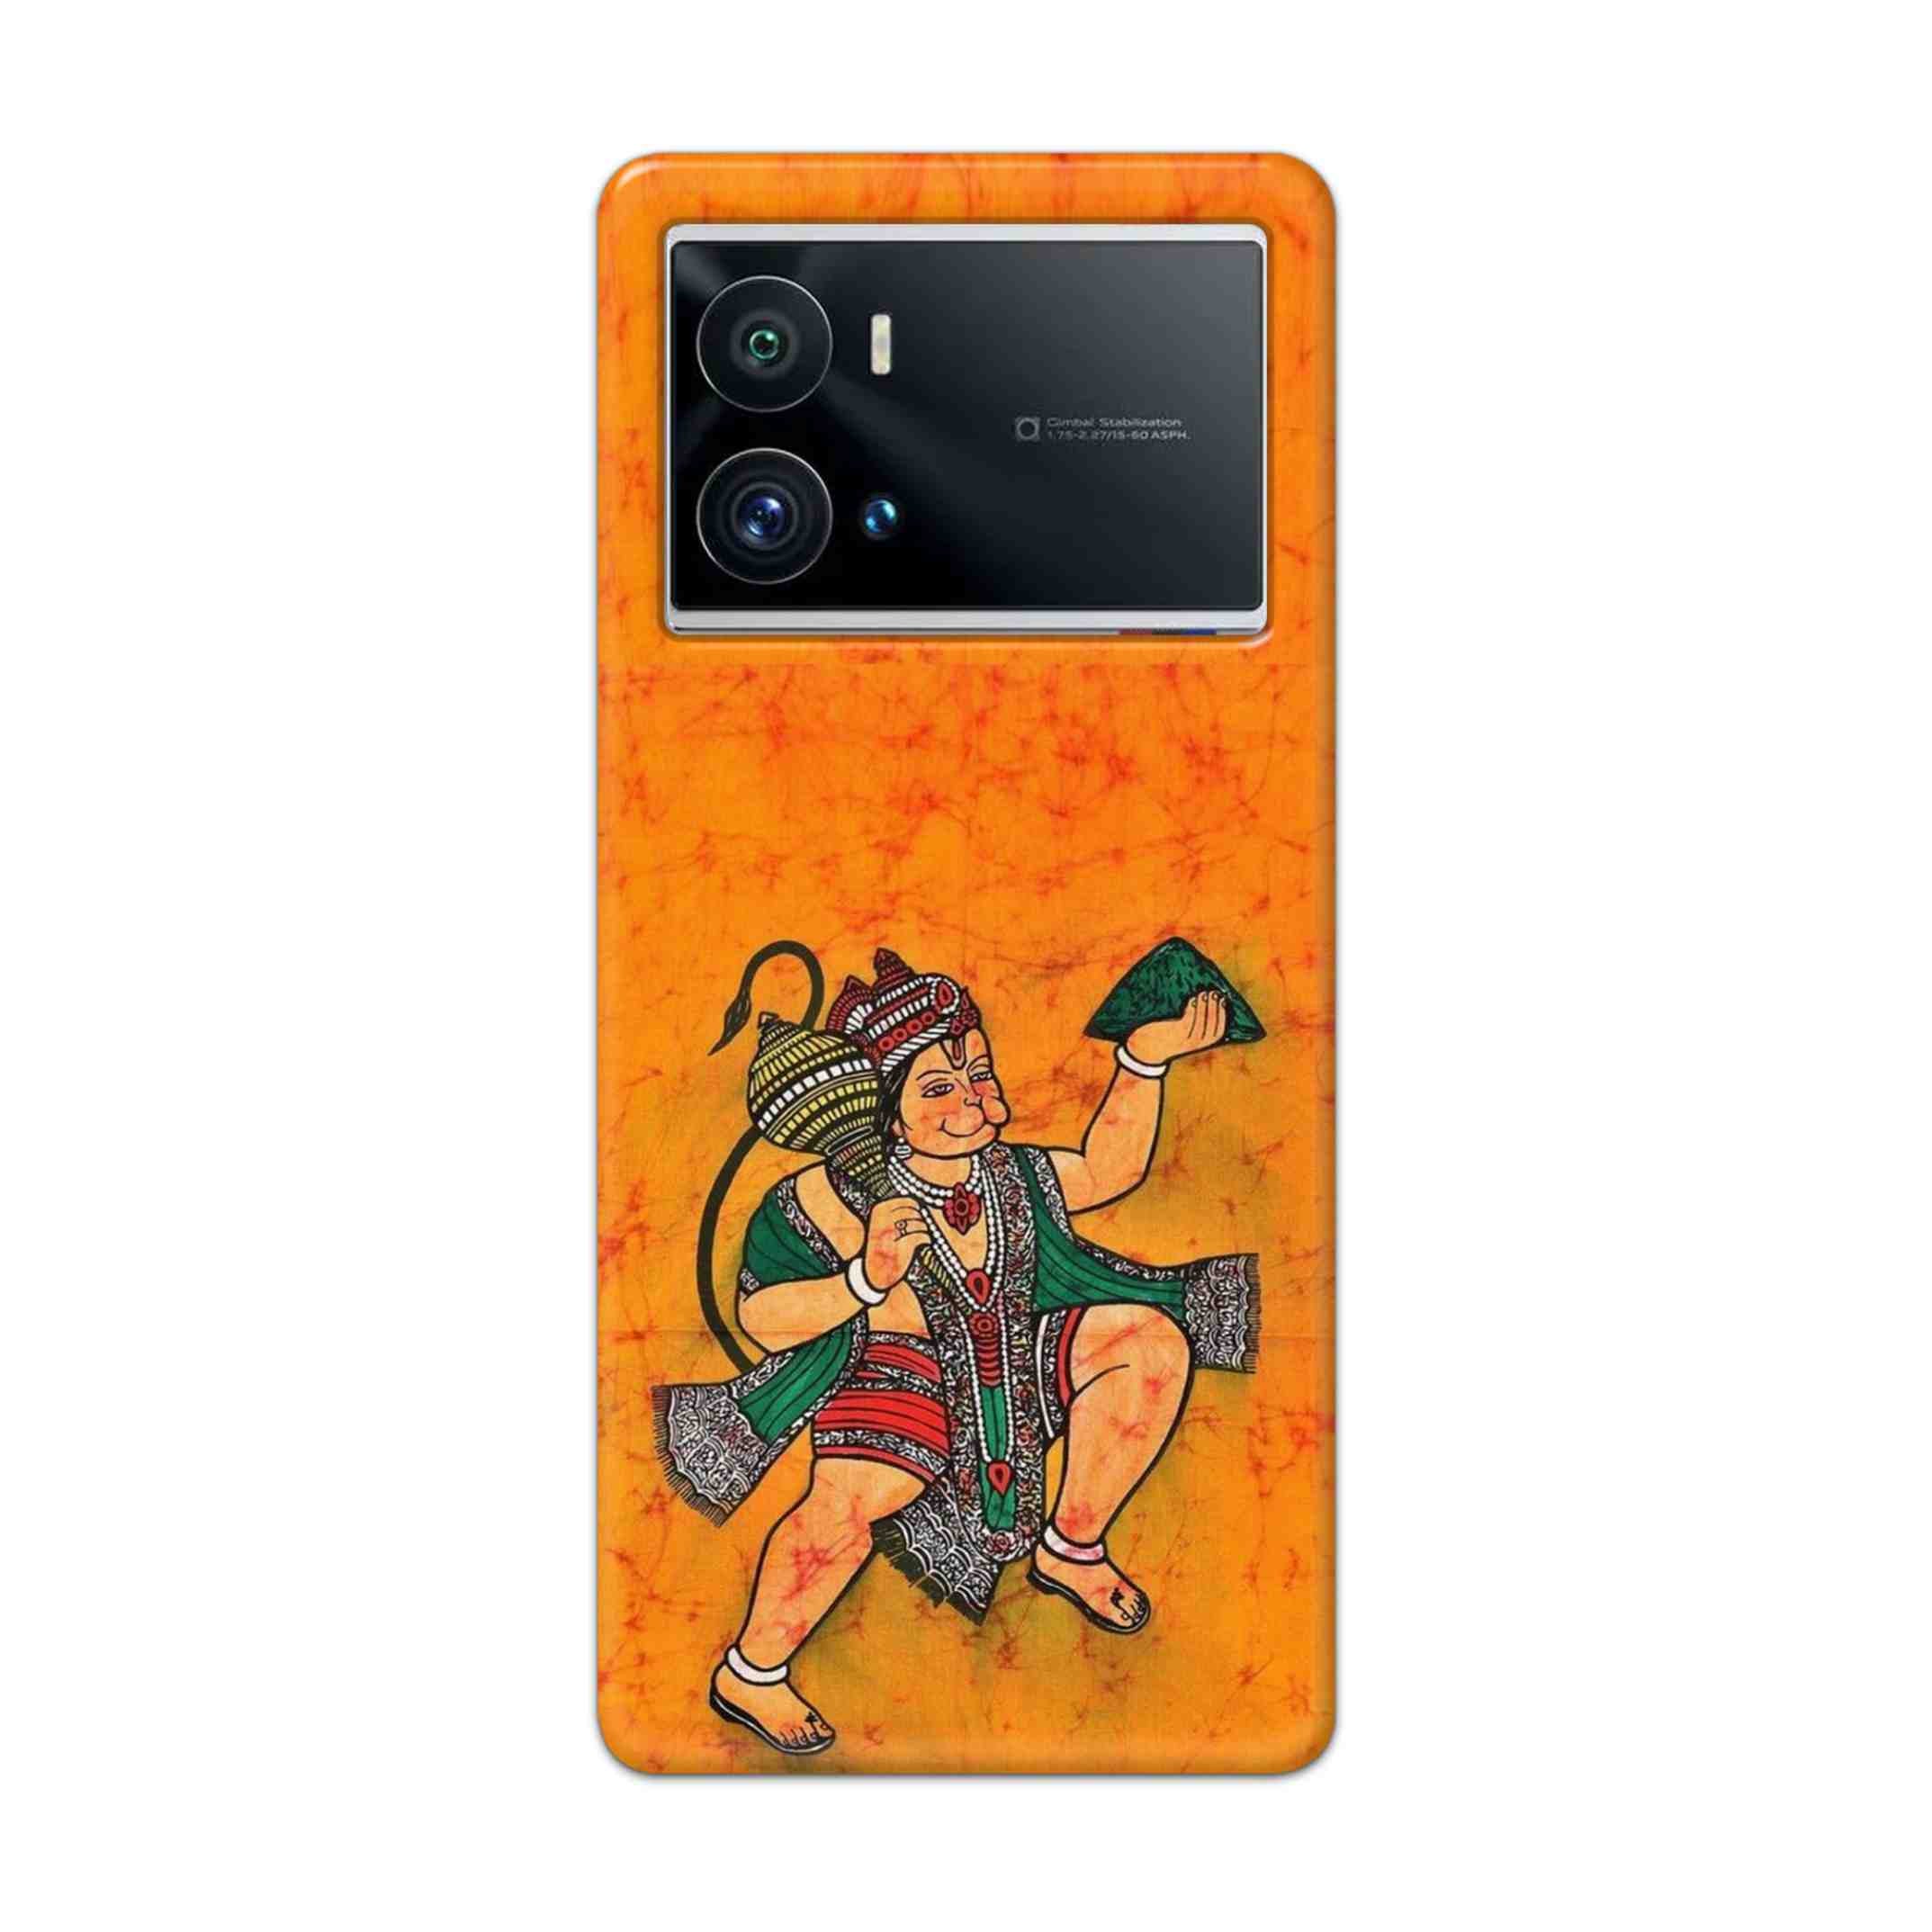 Buy Hanuman Ji Hard Back Mobile Phone Case Cover For iQOO 9 Pro 5G Online